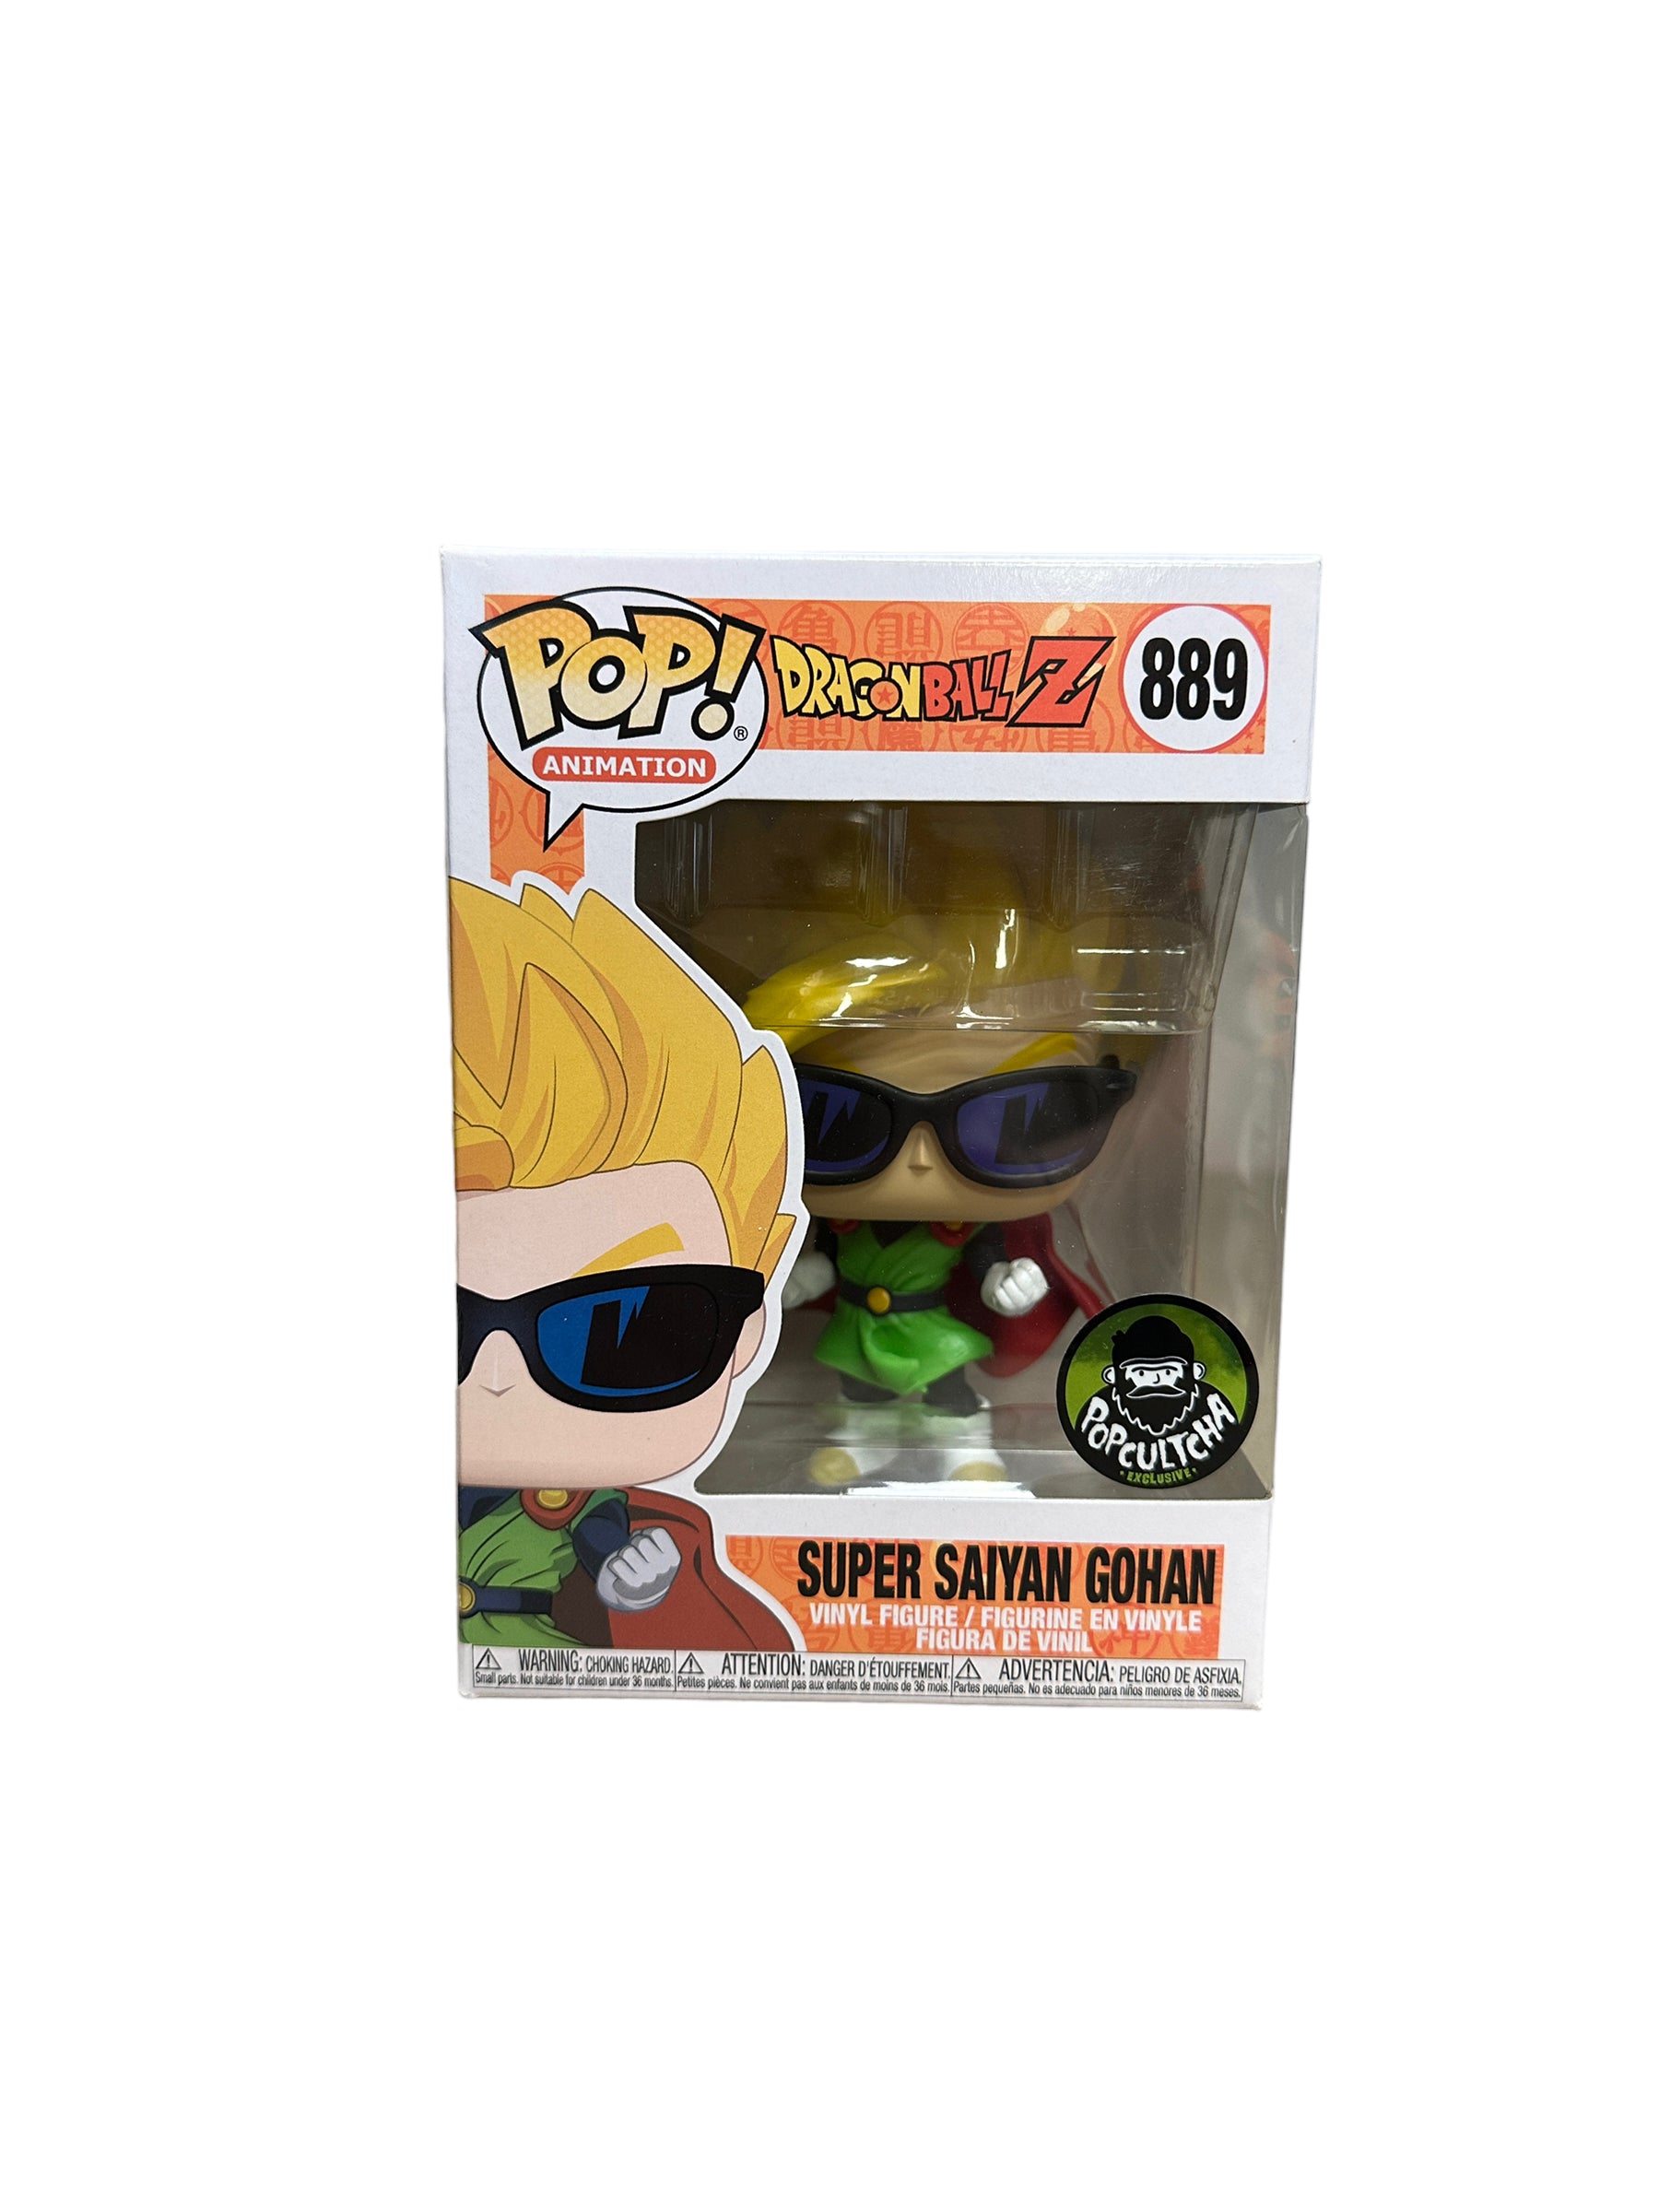 Super Saiyan Gohan #889 (w/ Sunglasses) Funko Pop! - Dragon Ball Z - Popcultcha Exclusive - Condition 7/10